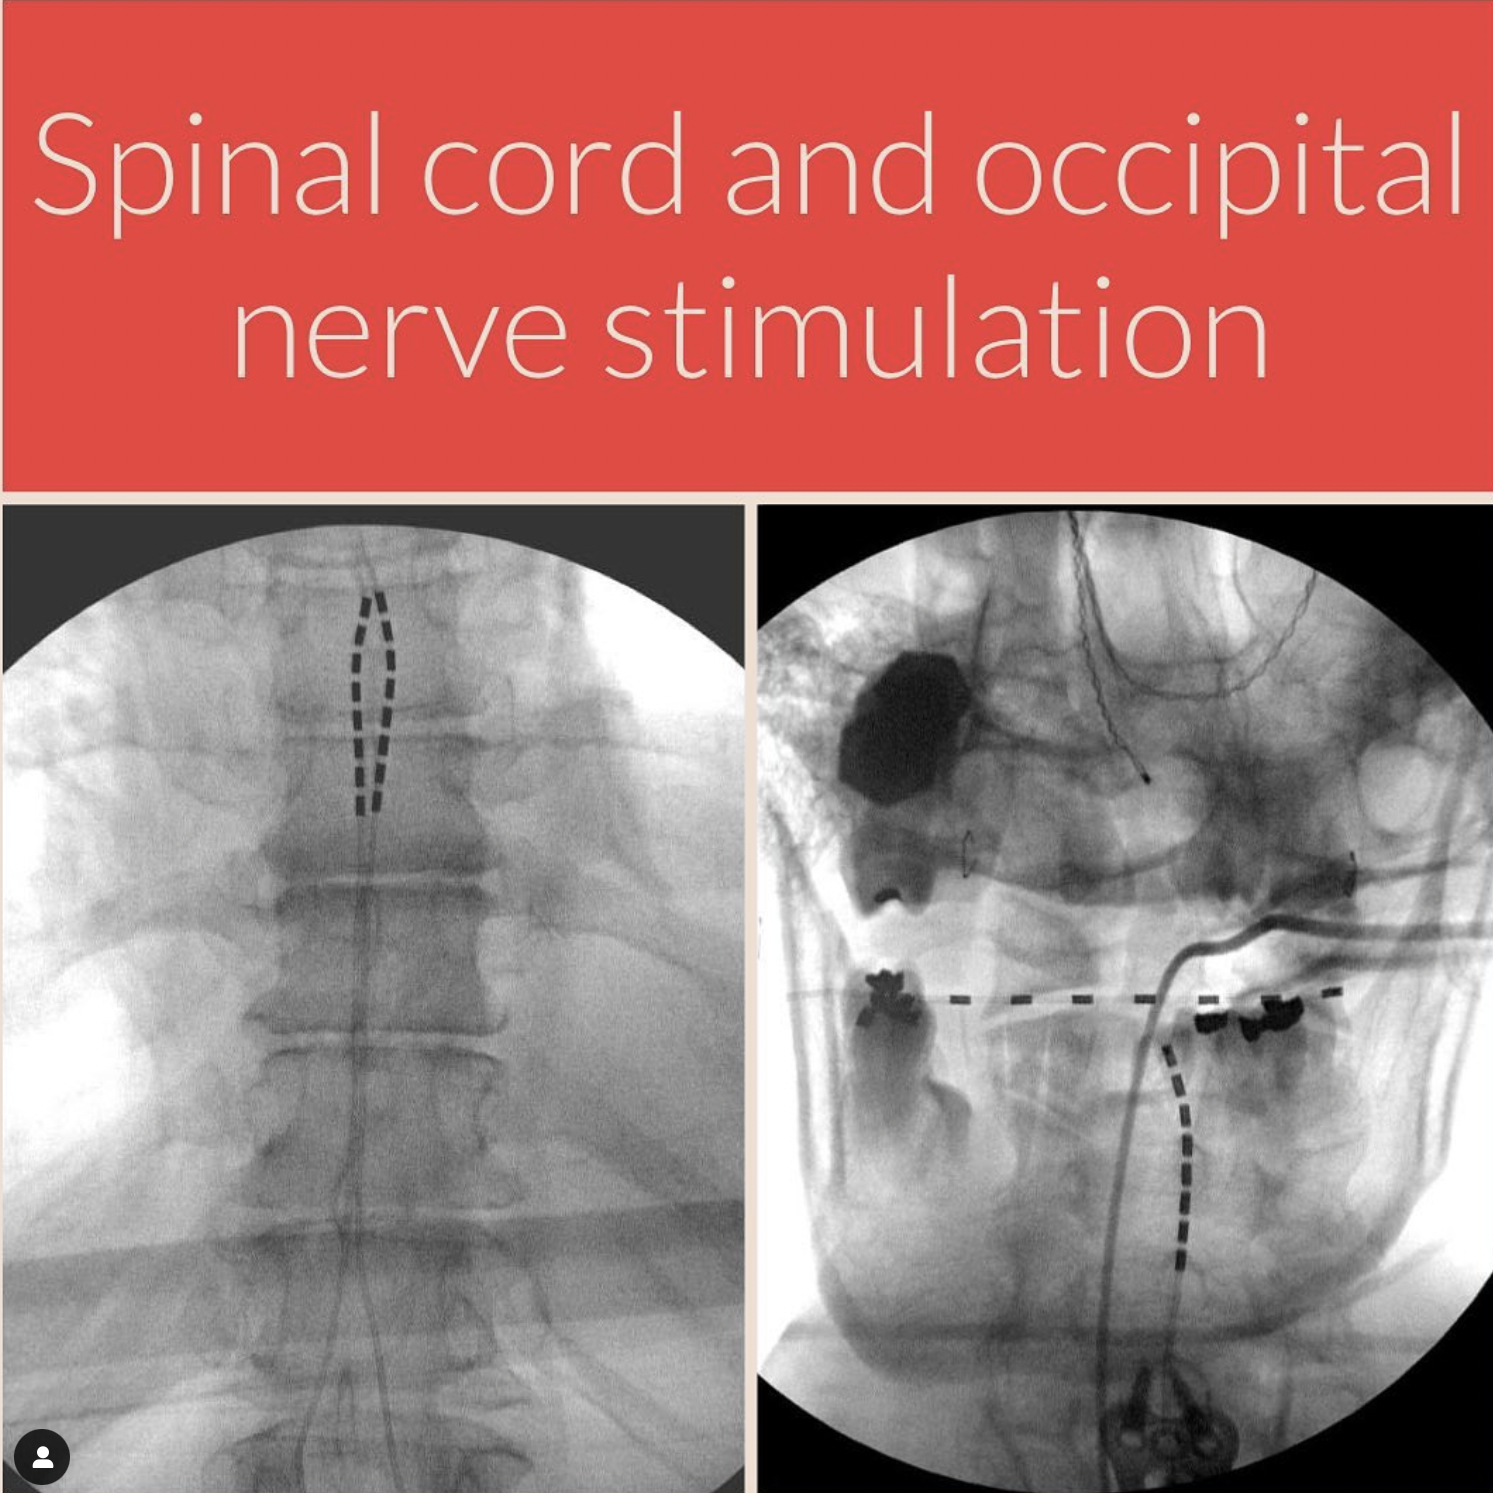 Spinal Cord Stimulation, CorTec